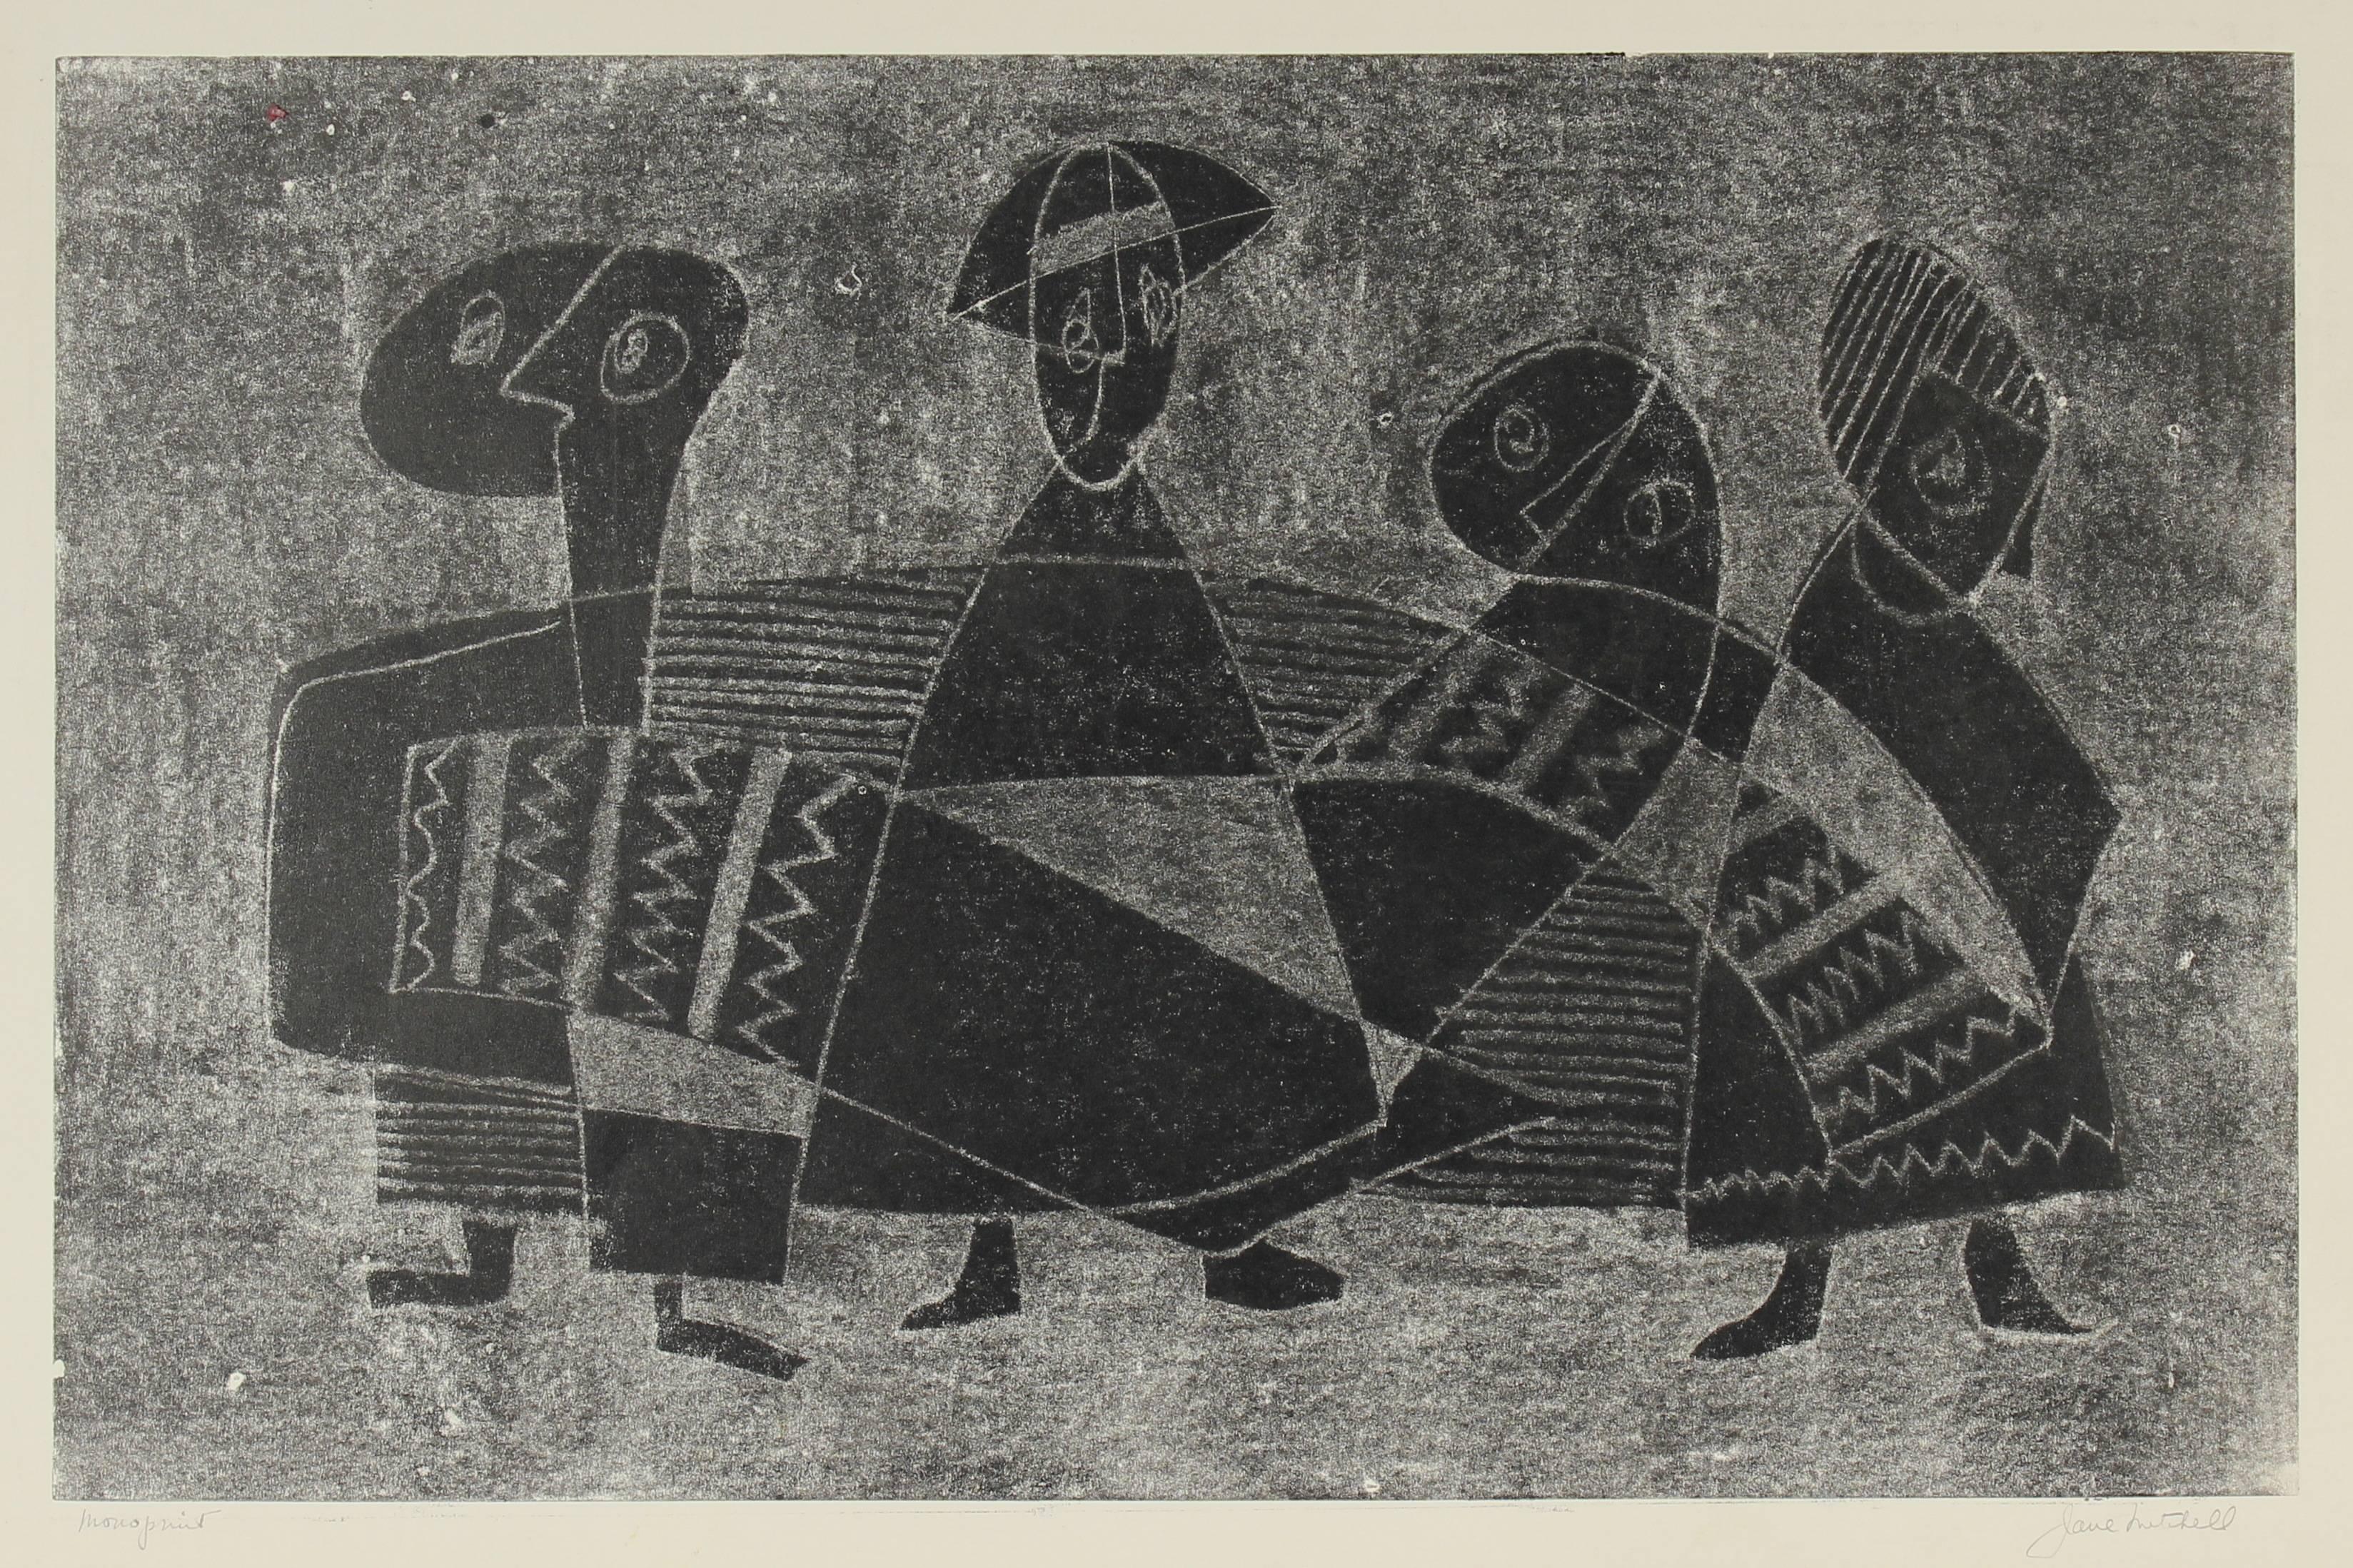 Jane Mitchell Figurative Print - Monochromatic Cubist Figures, Original Monotype Print, 1960s